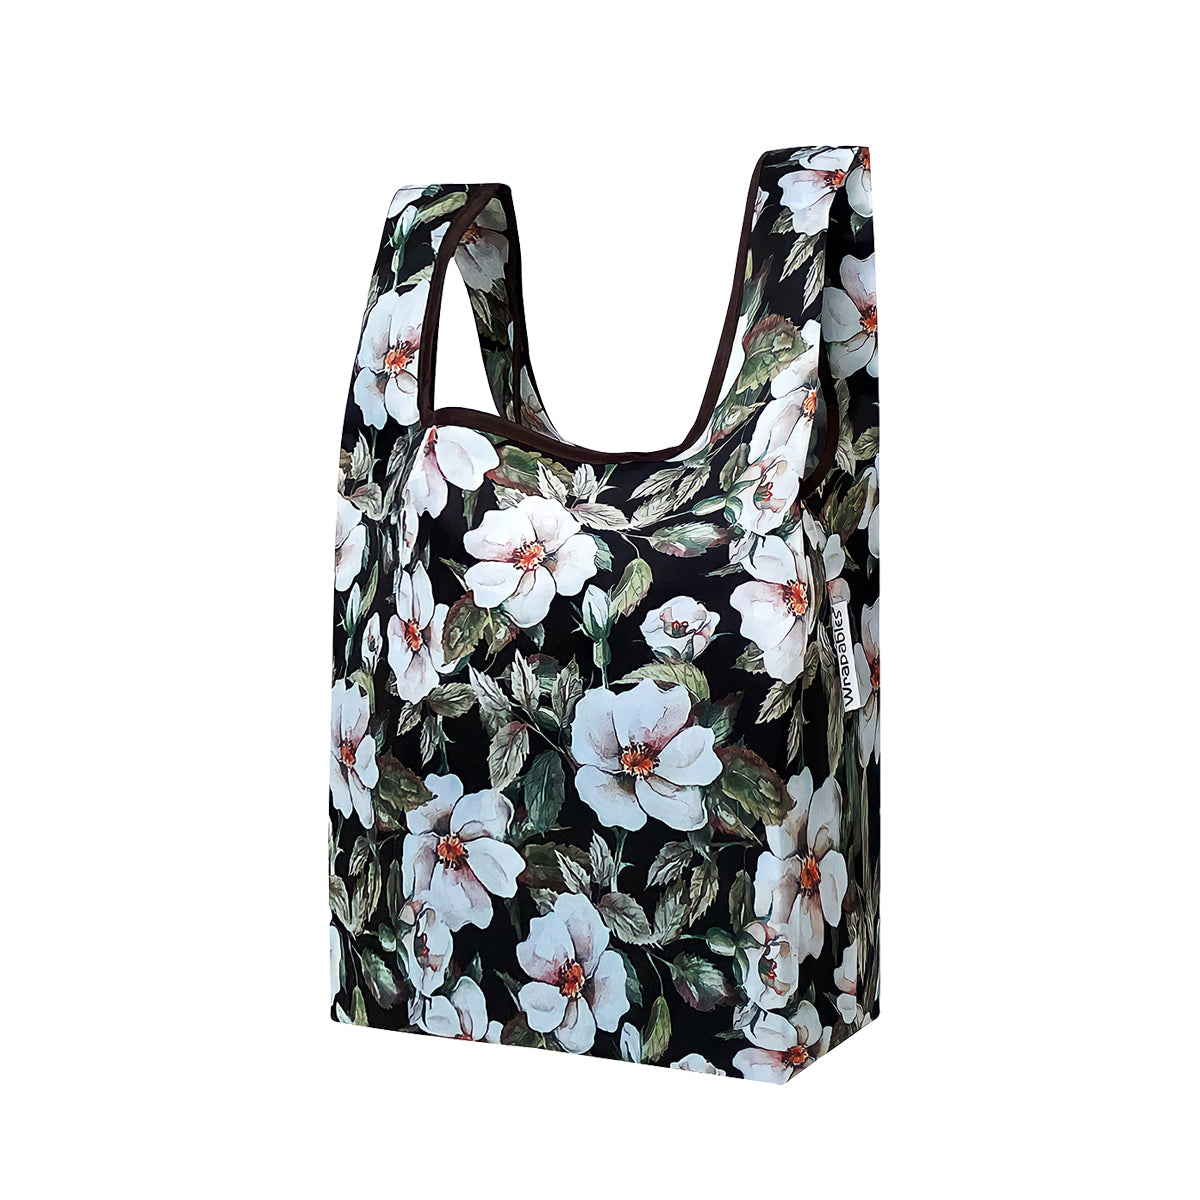 Wrapables Small JoliBag Collection Reusable Shopping Bag